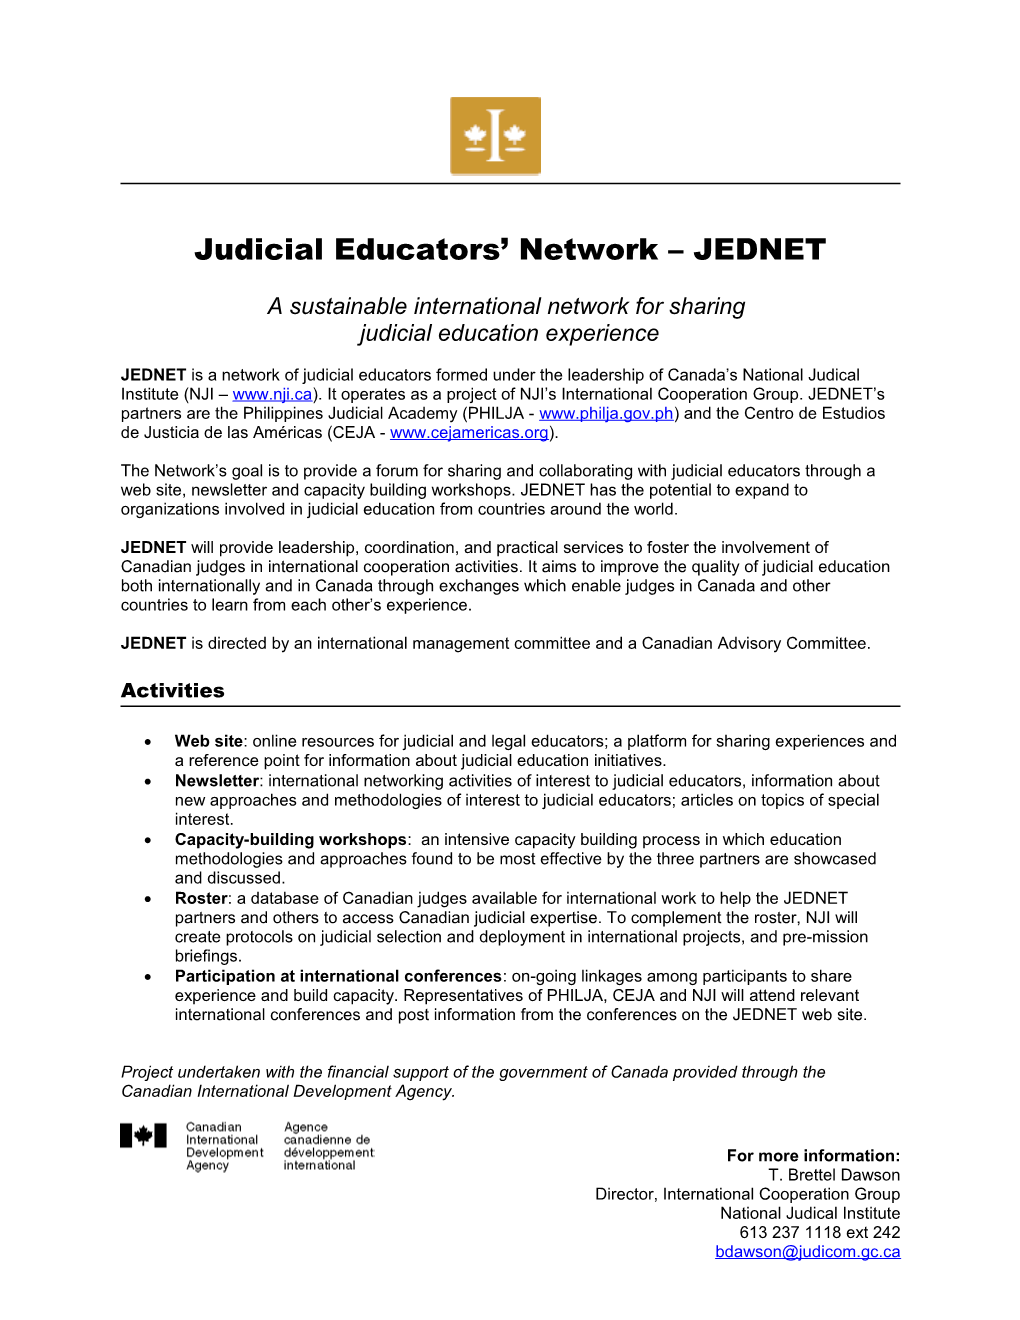 Judicial Education Network